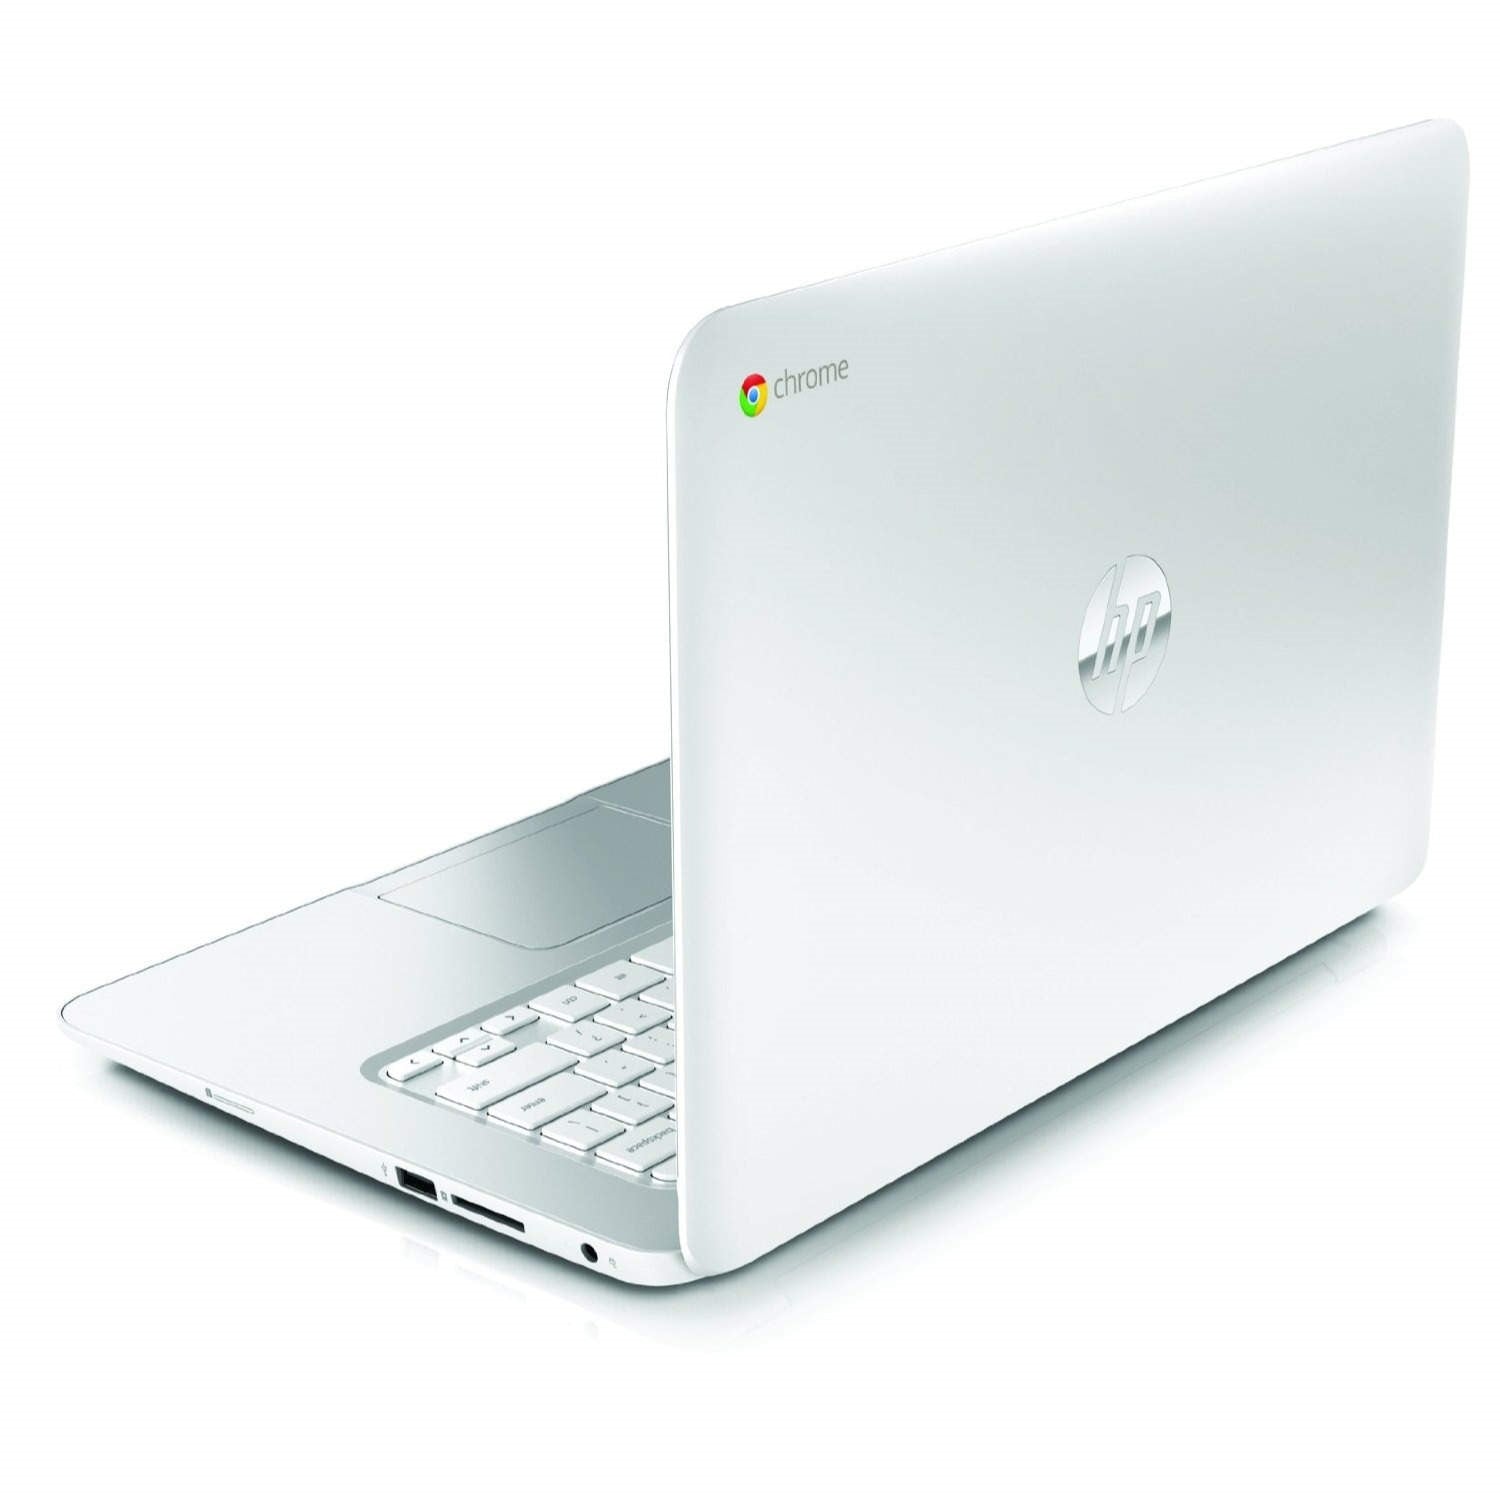 HP Chromebook 14-Q010SA Intel Celeron 2955U 4GB RAM 16GB 14" - White - Good